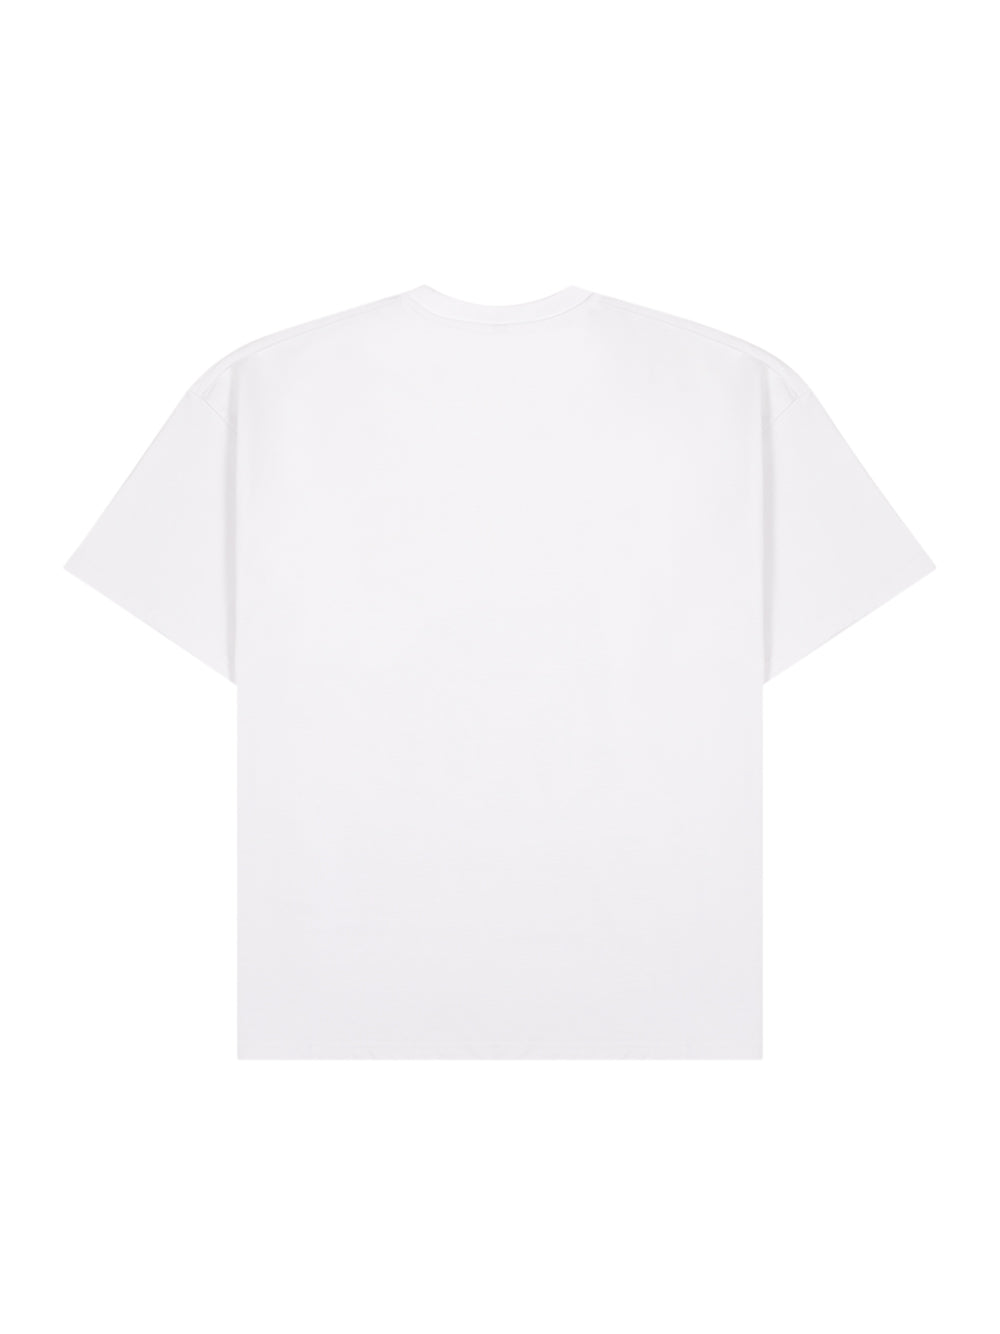 T-shirt Astroboy Face (White)